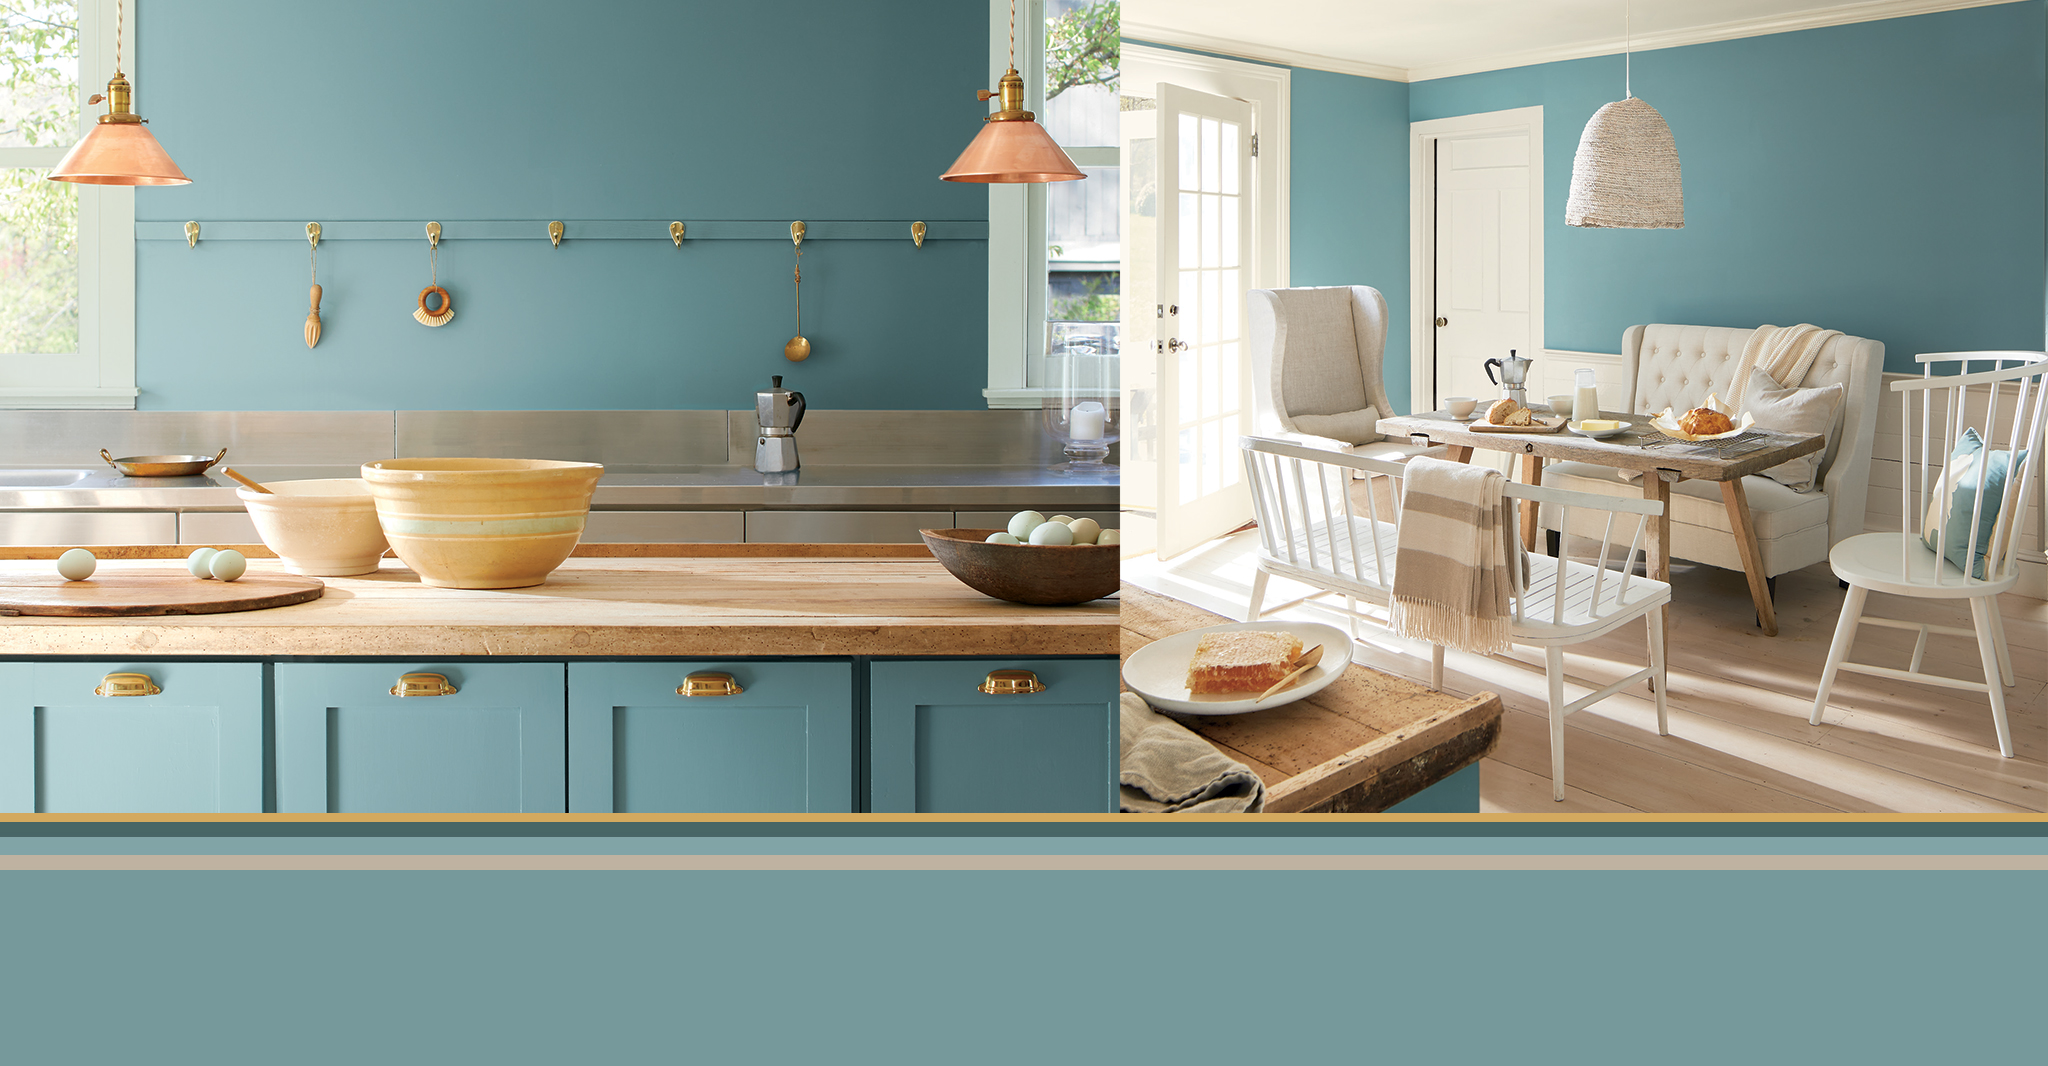 Unique Benjamin Moore Kitchen Cabinet Paint Colors 2021 with Simple Decor